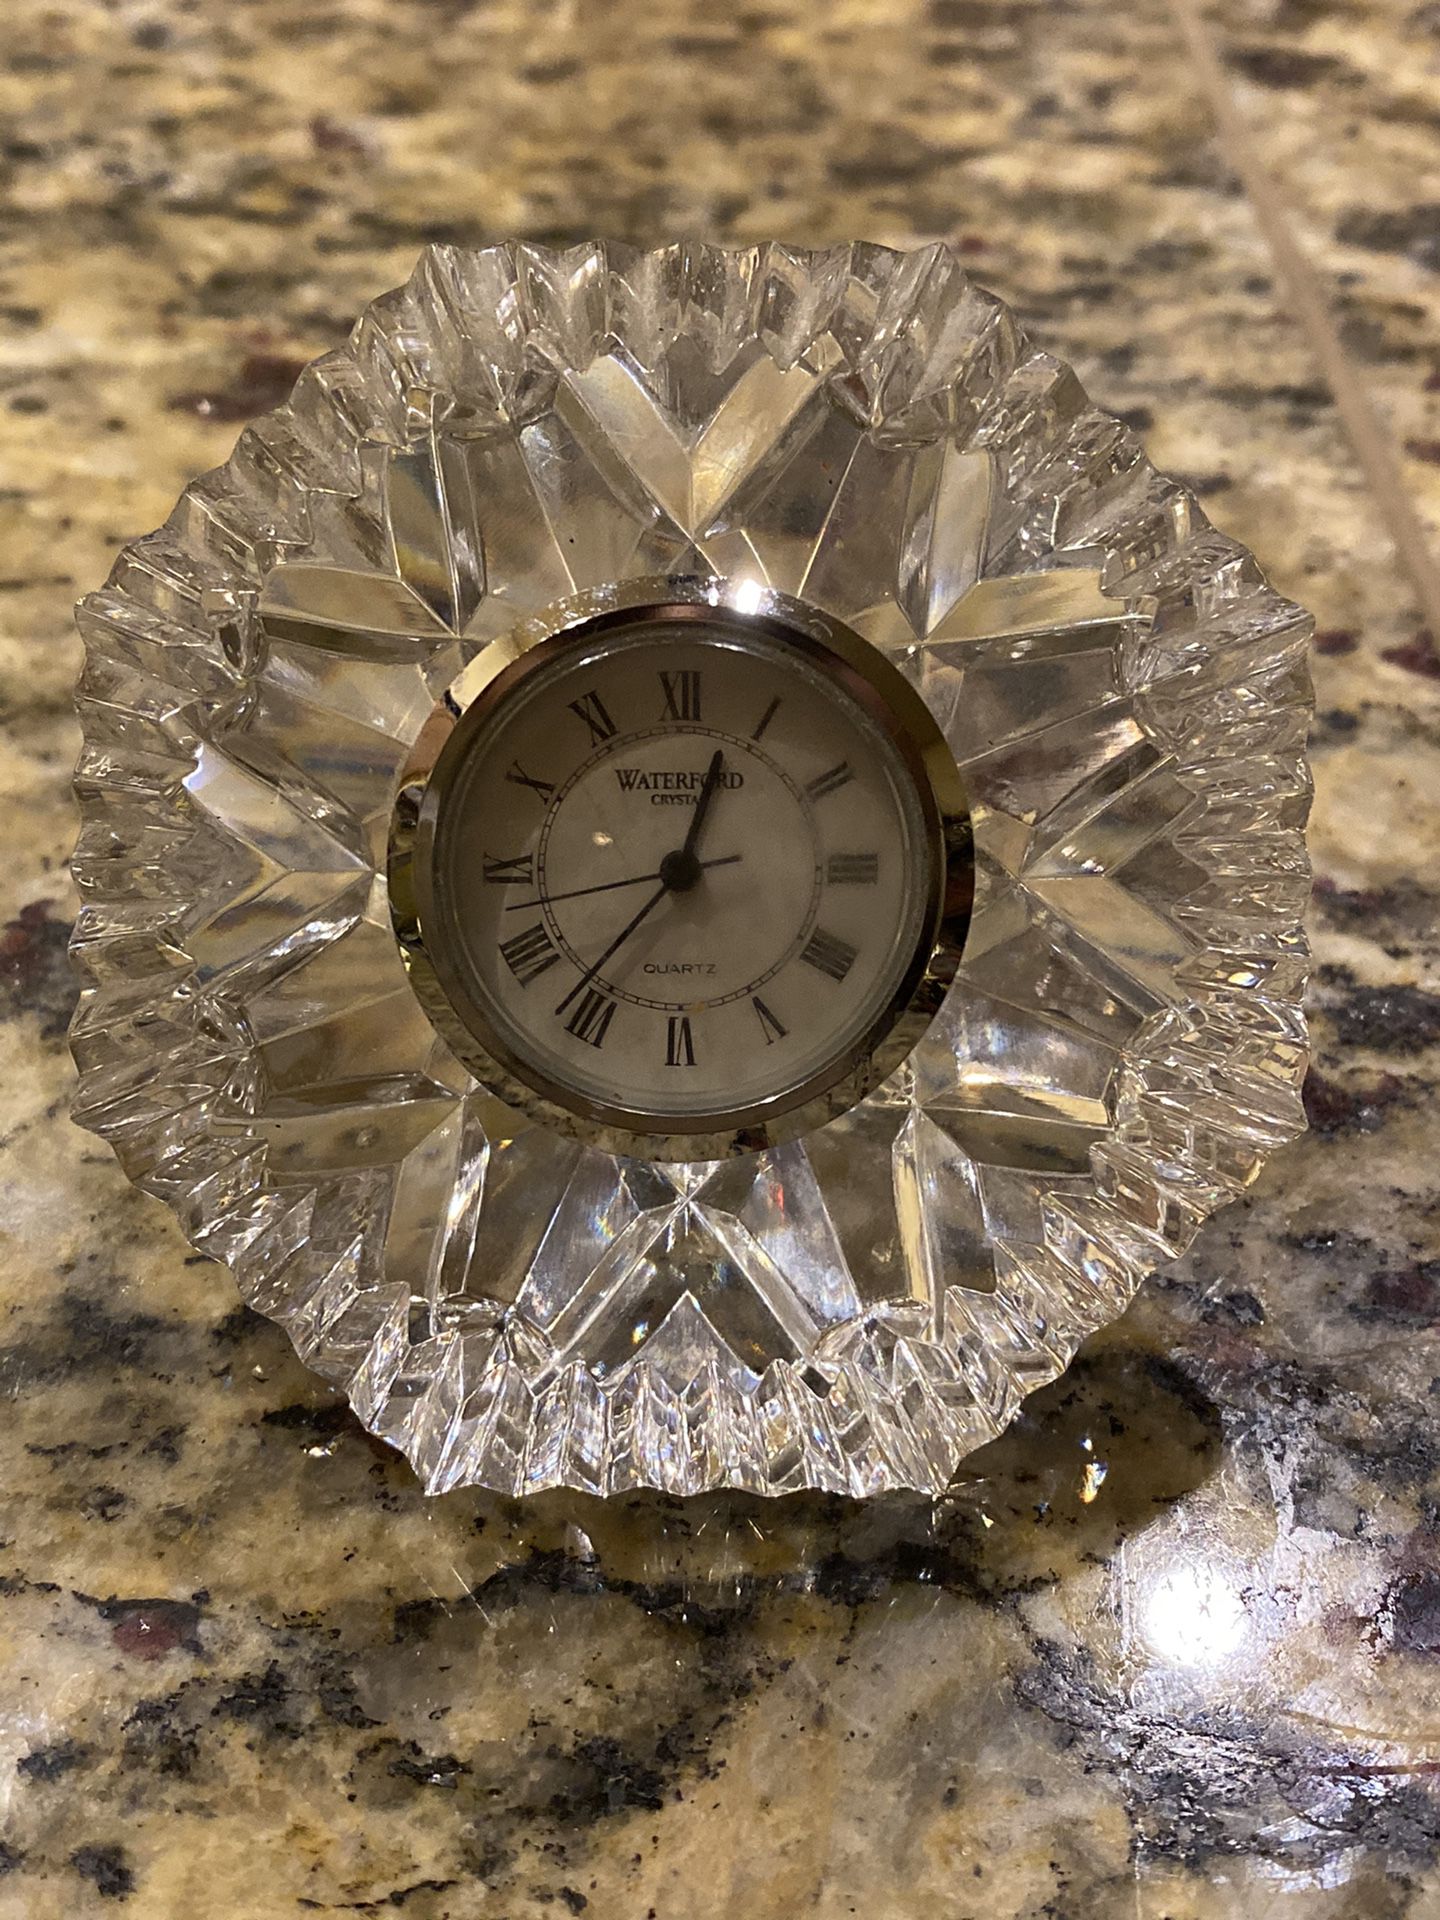 3” Waterford Crystal Clock